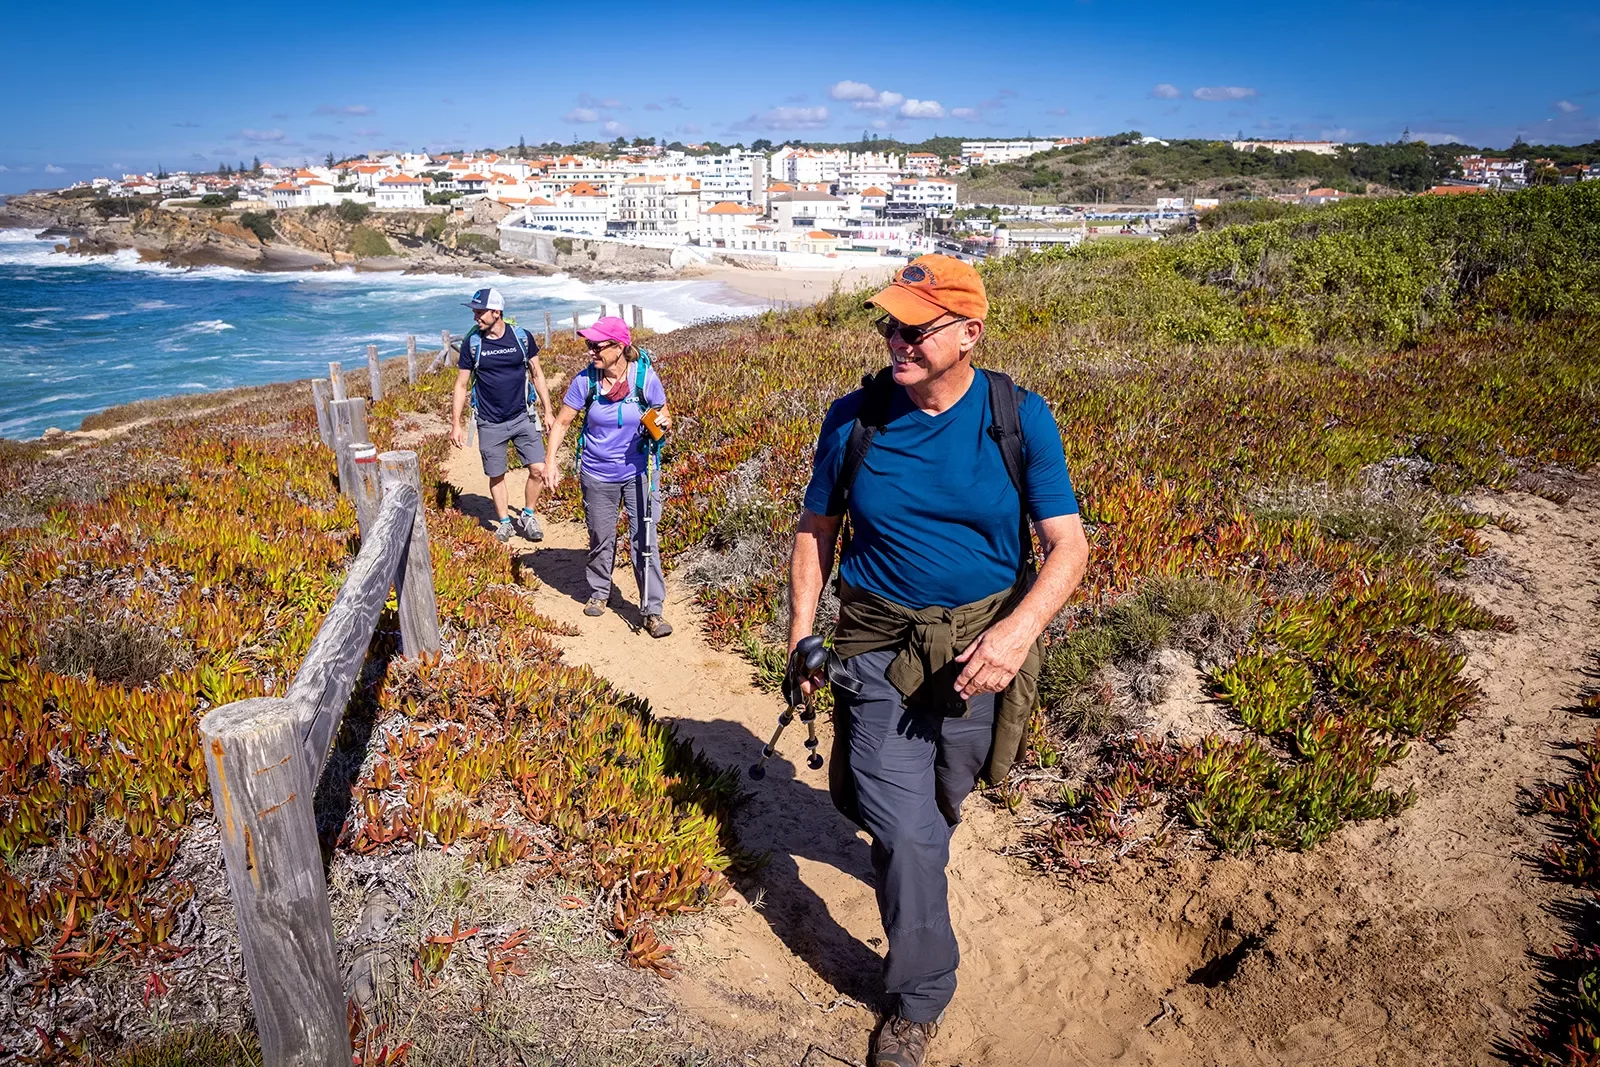 Three guests walking along ocean cliff, beach town behind them.